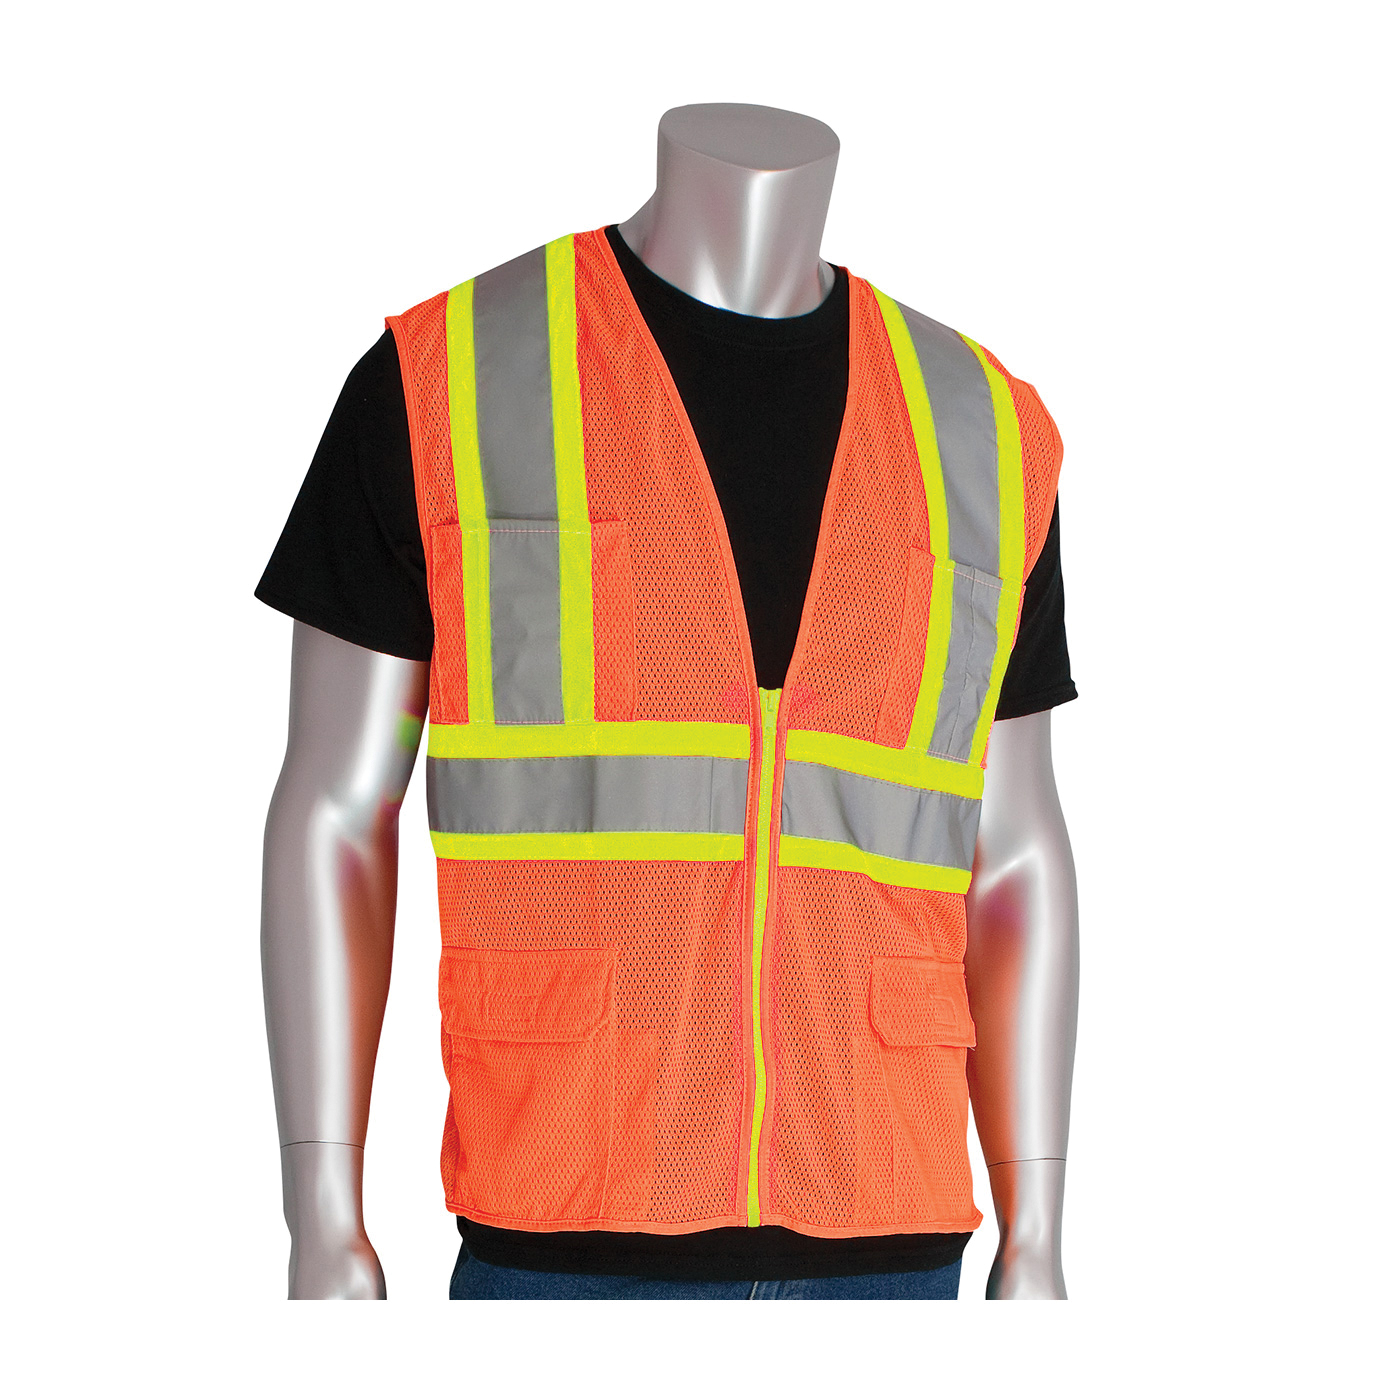 PIP® 302-MAPMOR-S 2-Tone Premium Surveyor Safety Vest, S, Hi-Viz Orange, Polyester, Zipper Closure, 11 Pockets, ANSI Class: Class 2, Specifications Met: ANSI 107 Type R